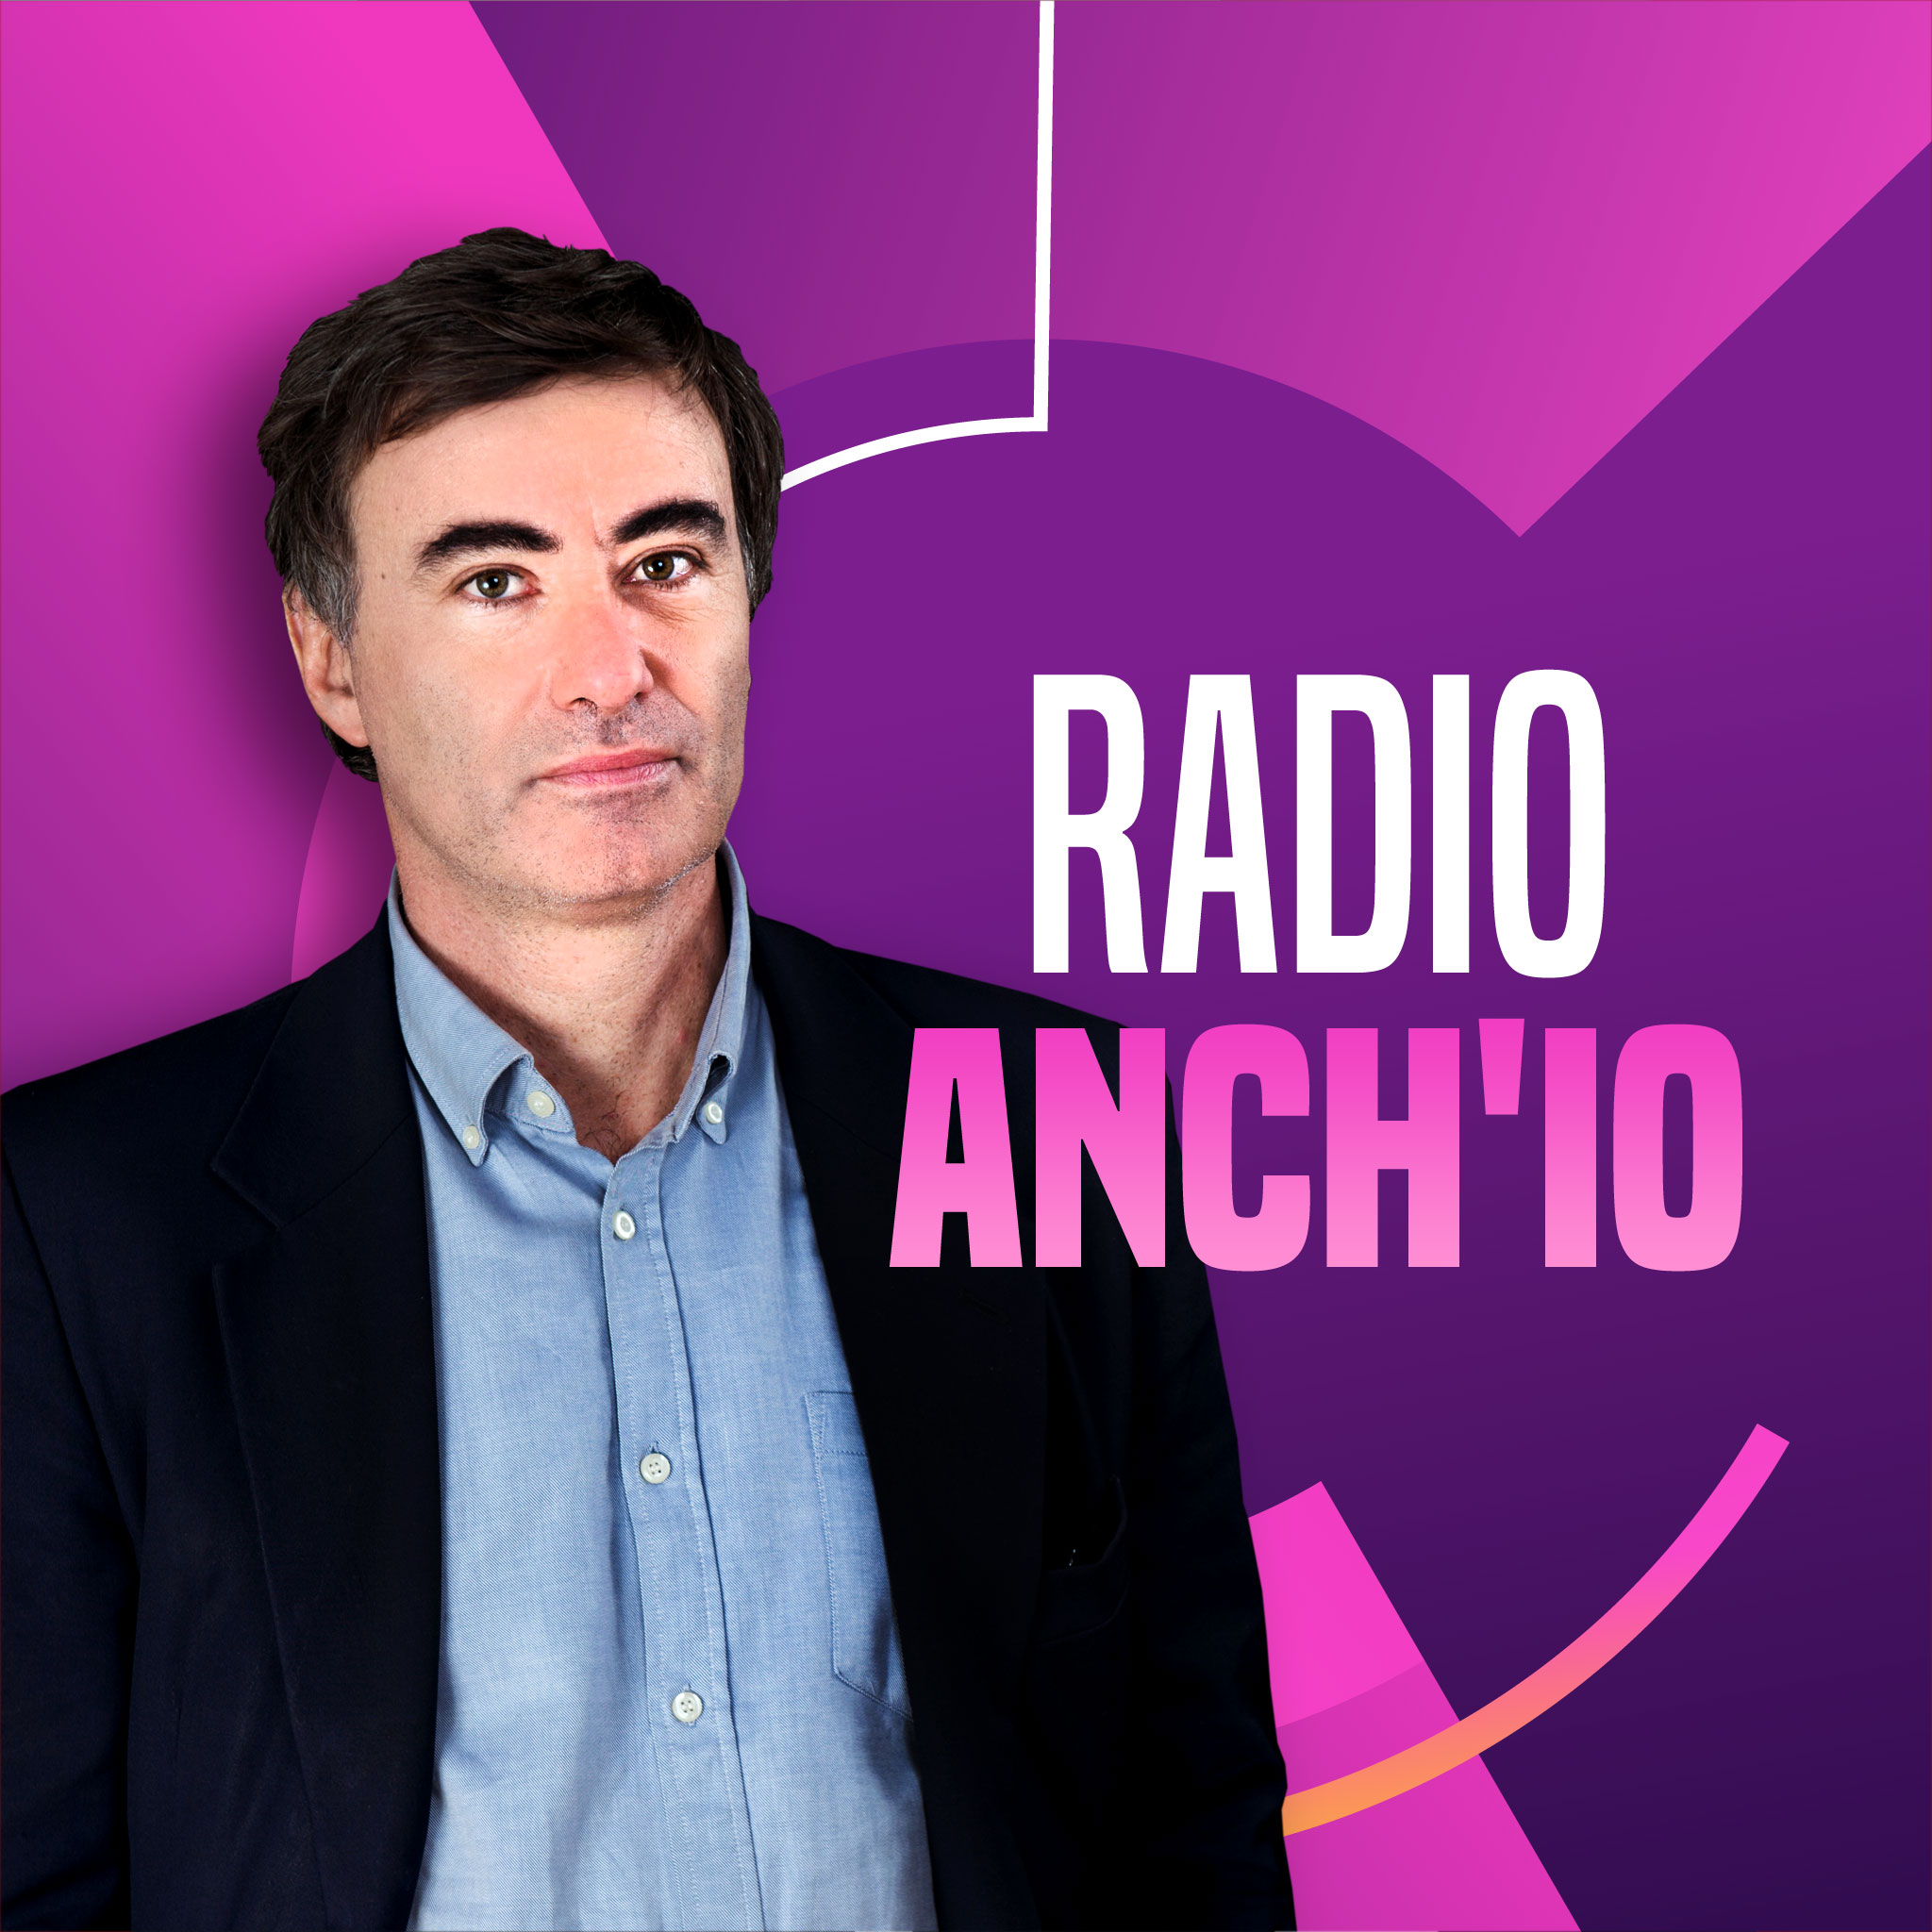 Rai Radio 1 Radio Anch'io